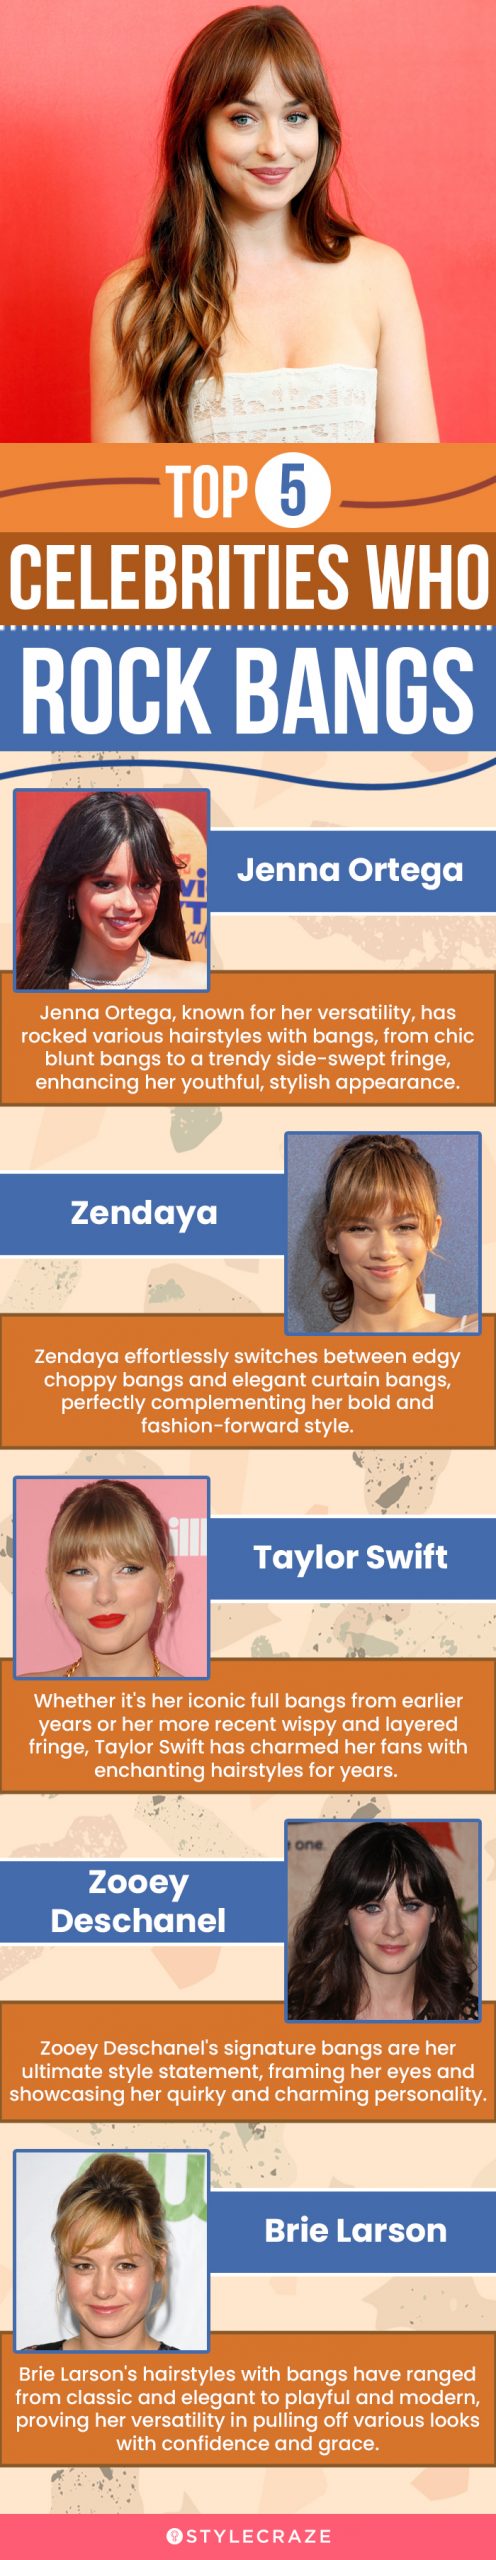 top 5 celebrities who rock bangs (infographic)